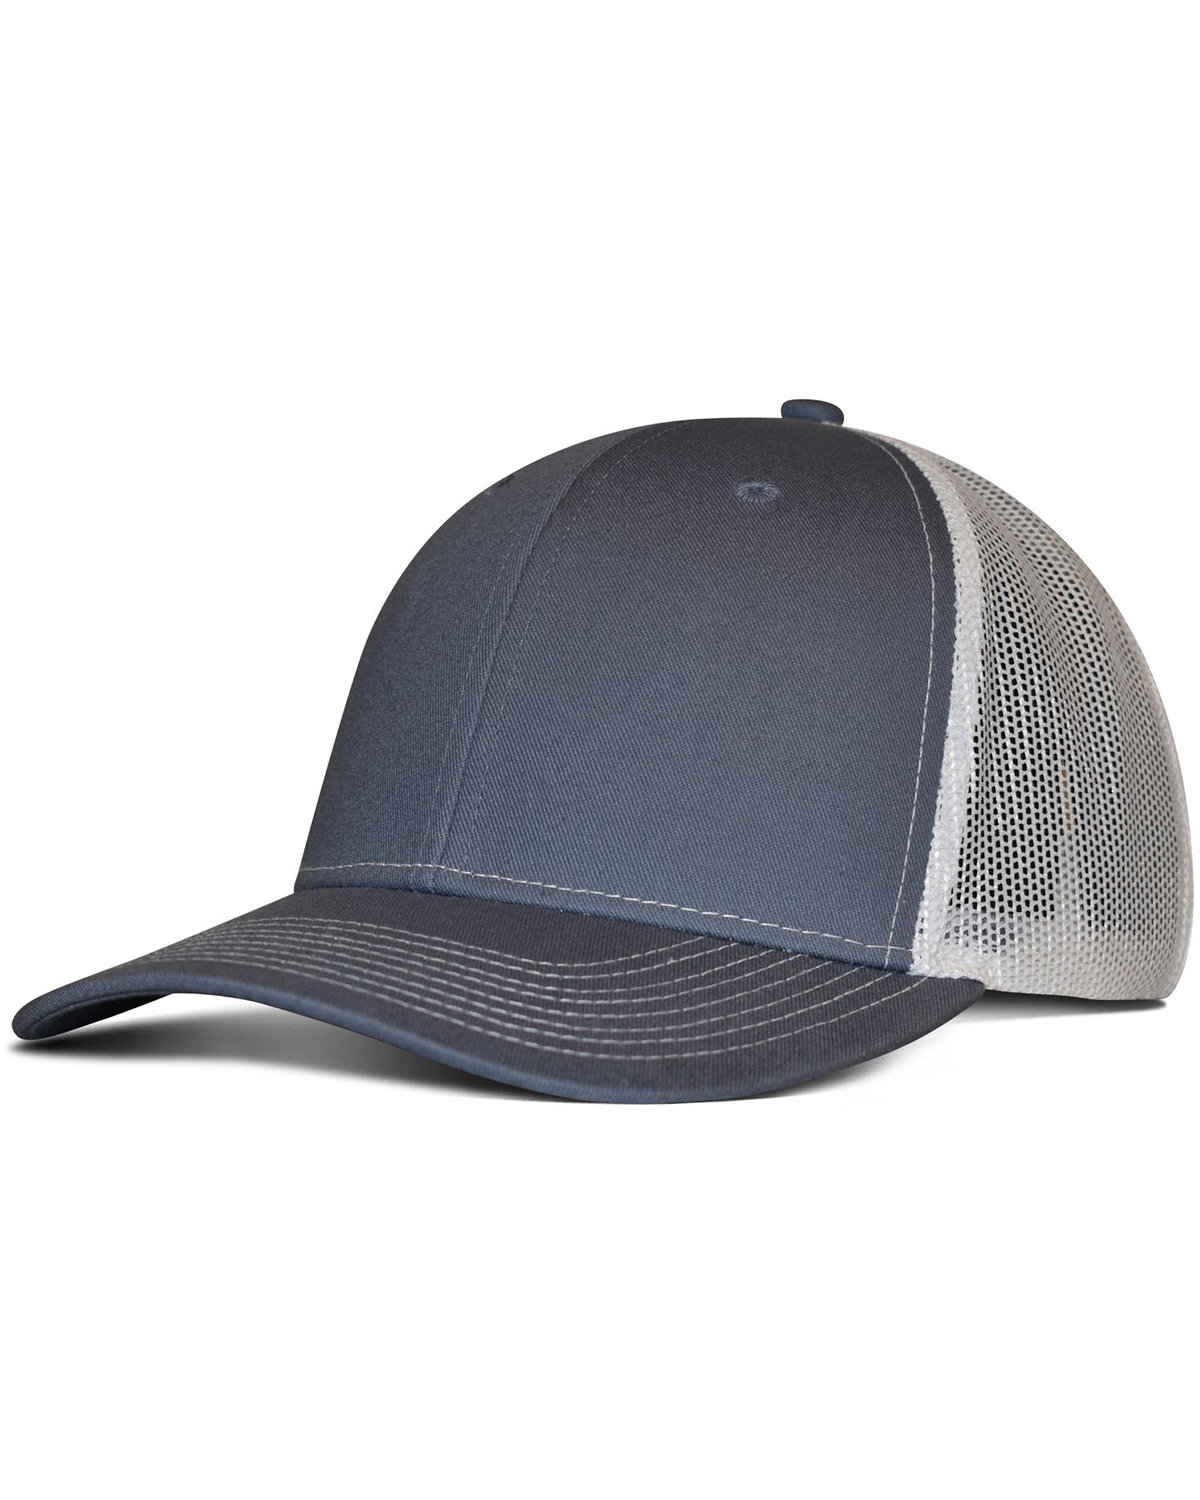 Fahrenheit Pro Style Trucker Hat | Generic Site - Priced